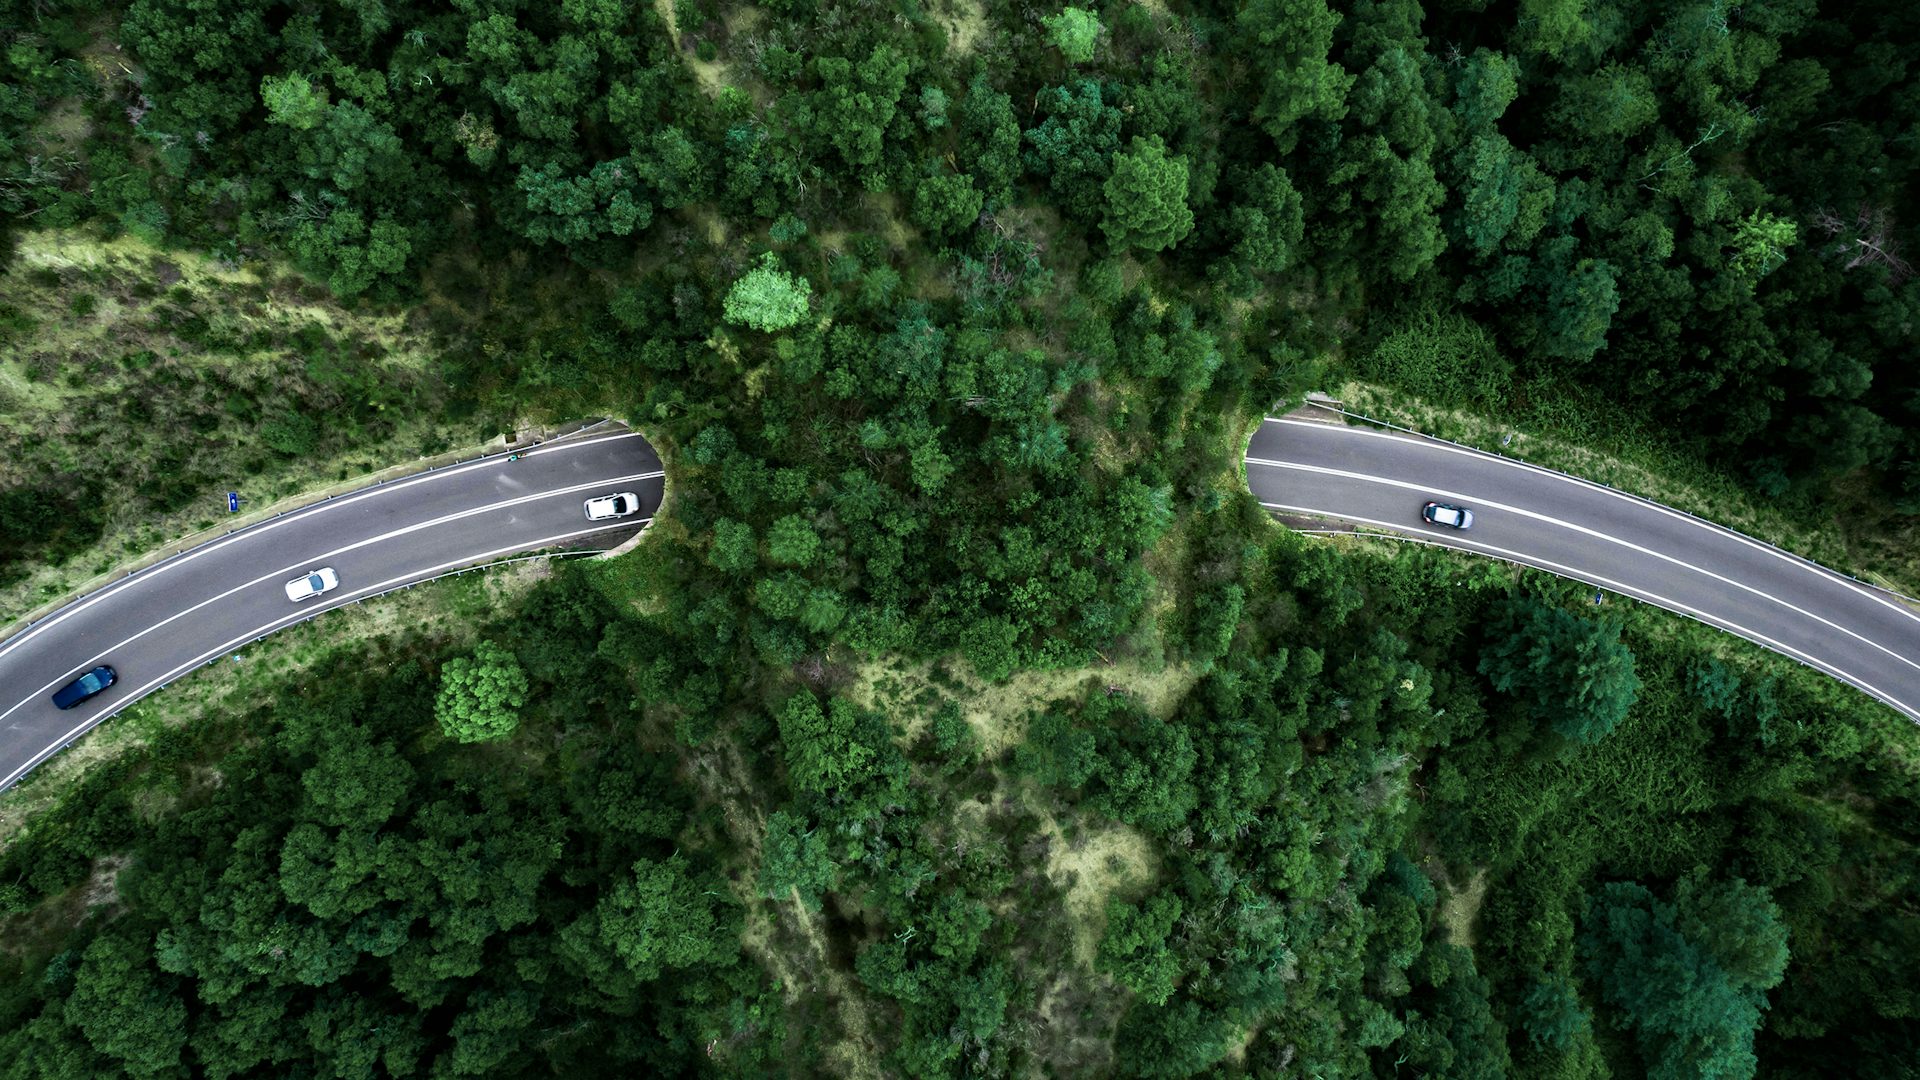 Vista aérea de una curva de carretera que atraviesa un paisaje boscoso.